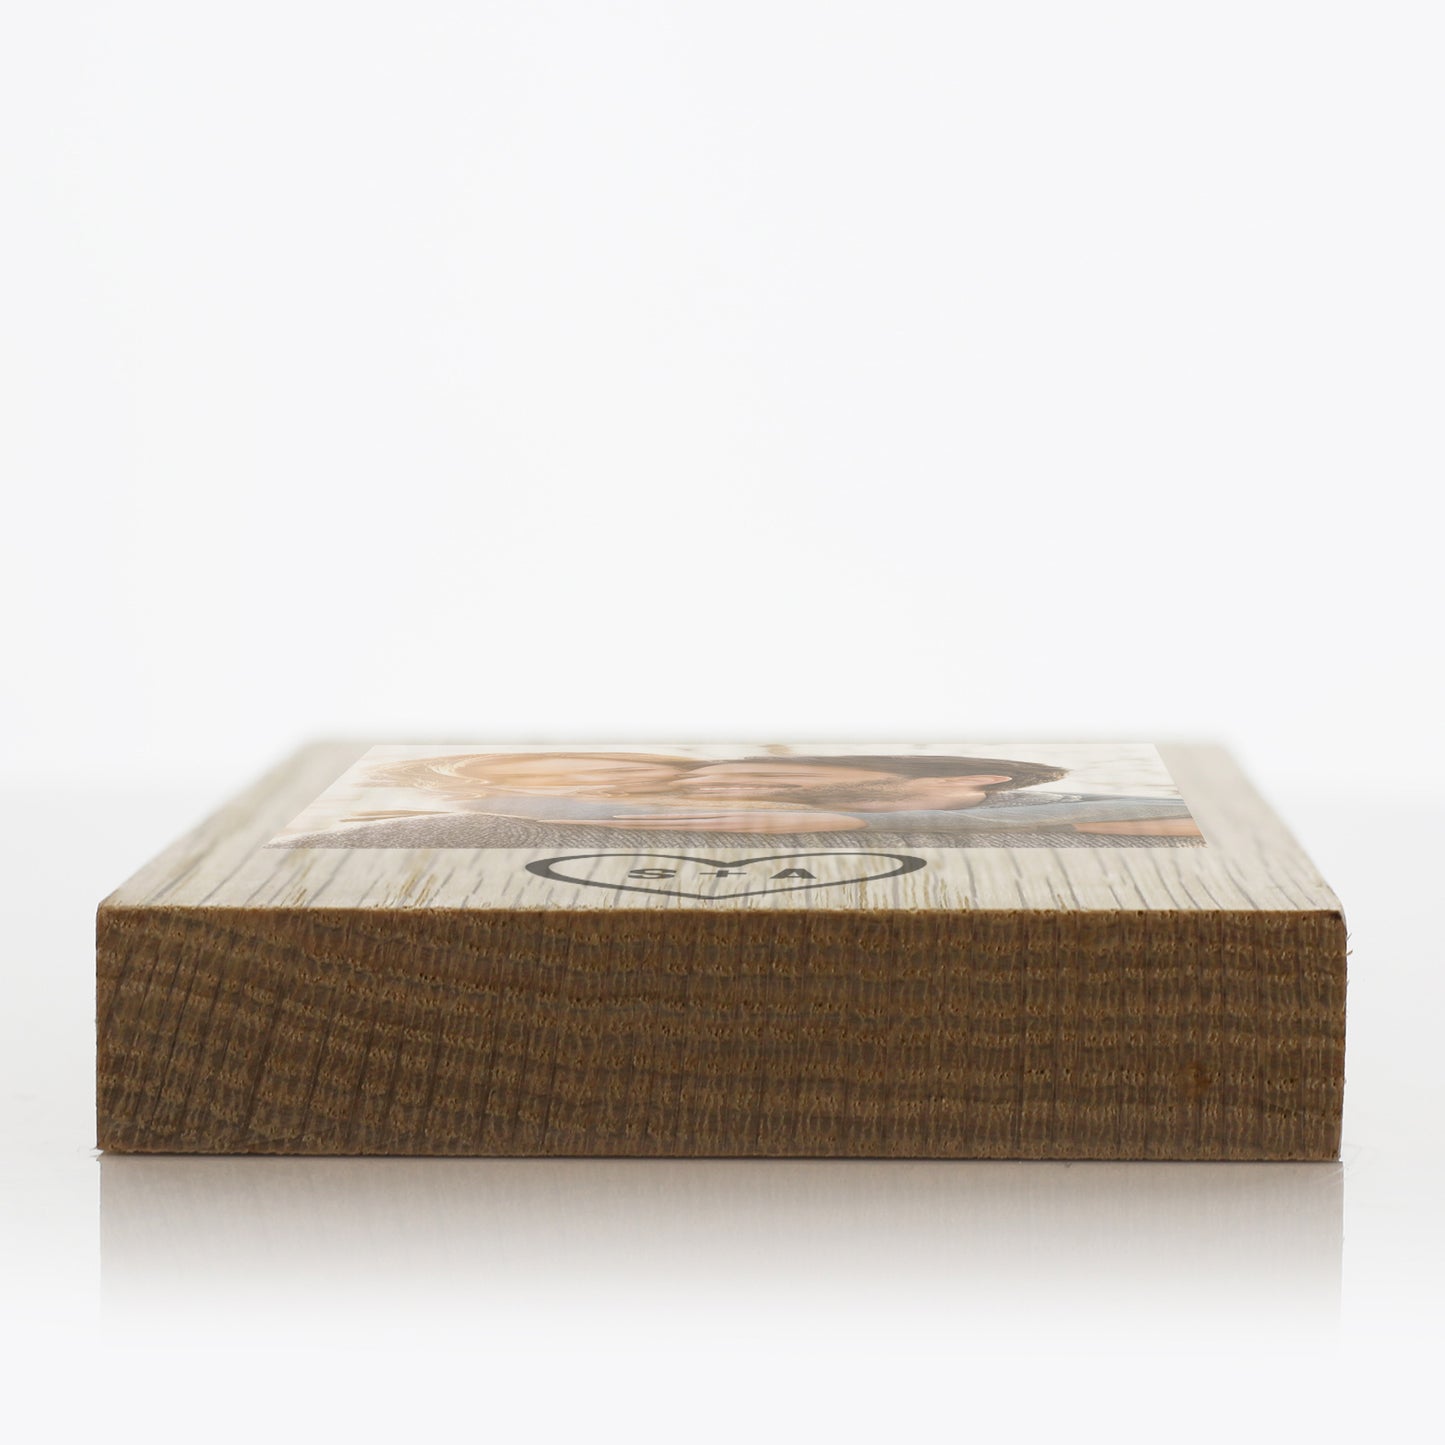 Personalisierter Holzblock – Foto &amp; Initialherz